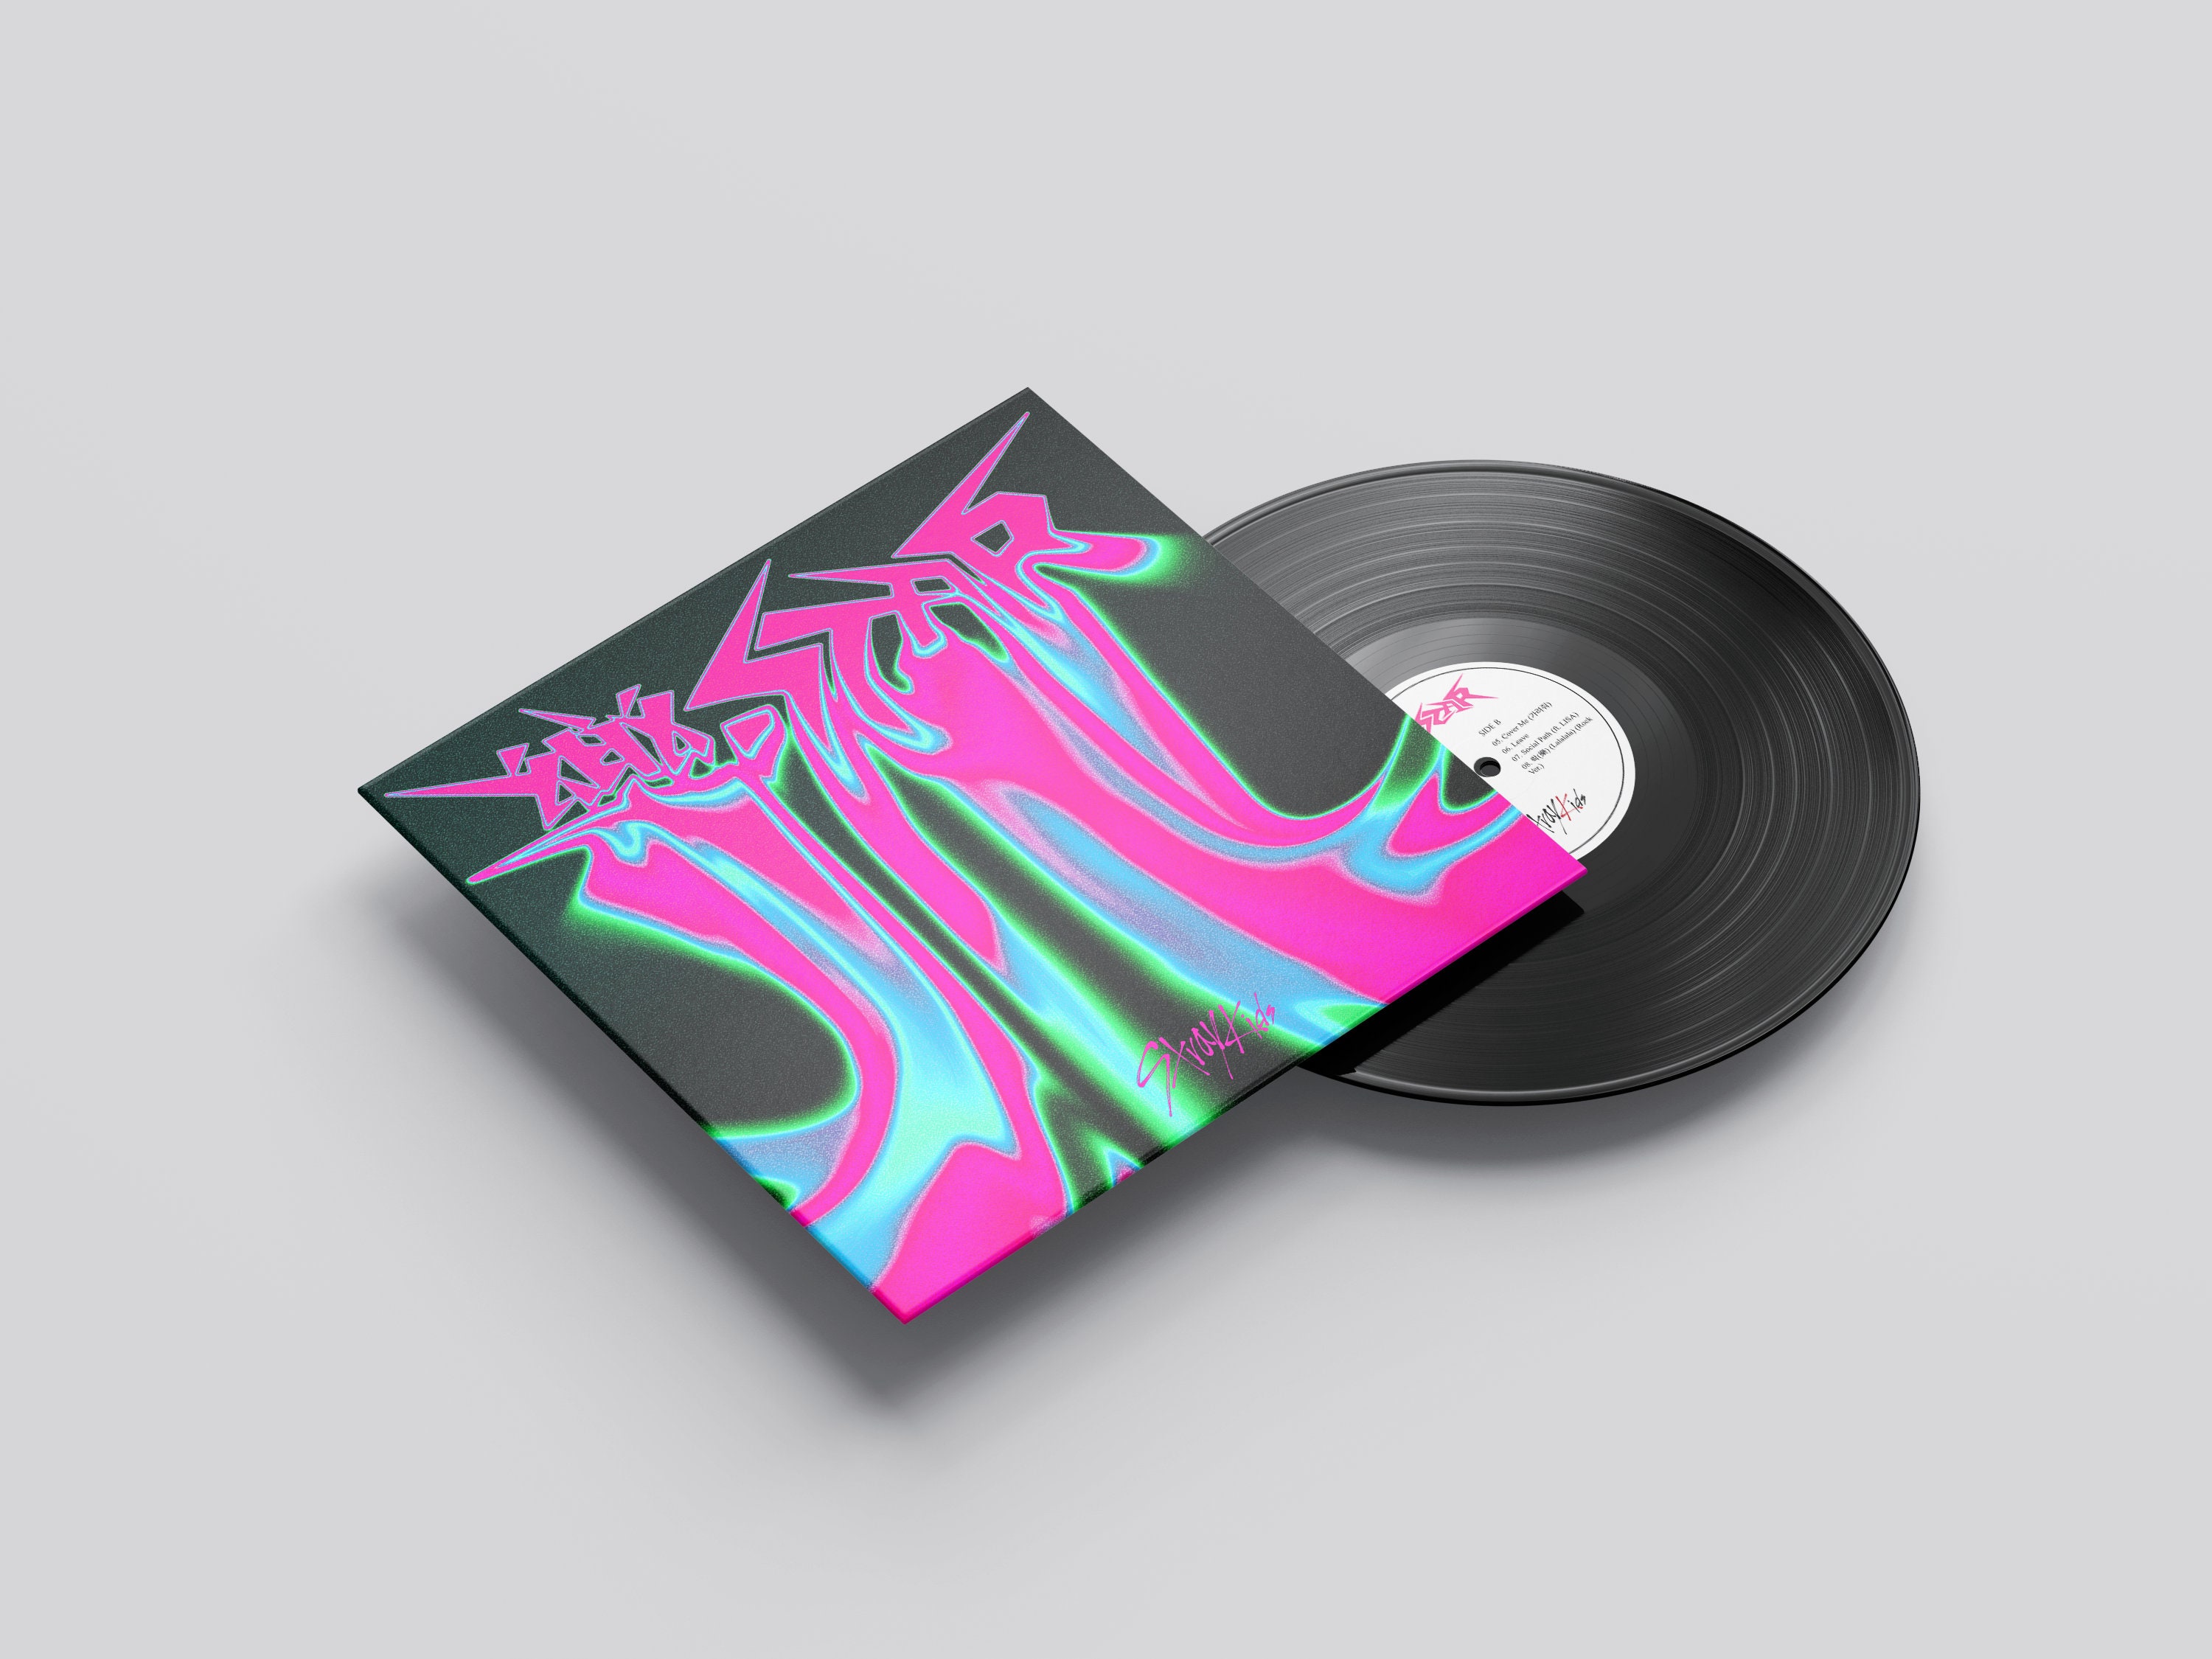 Stray Kids, ROCK-STAR Digital Album – Republic Records Official Store